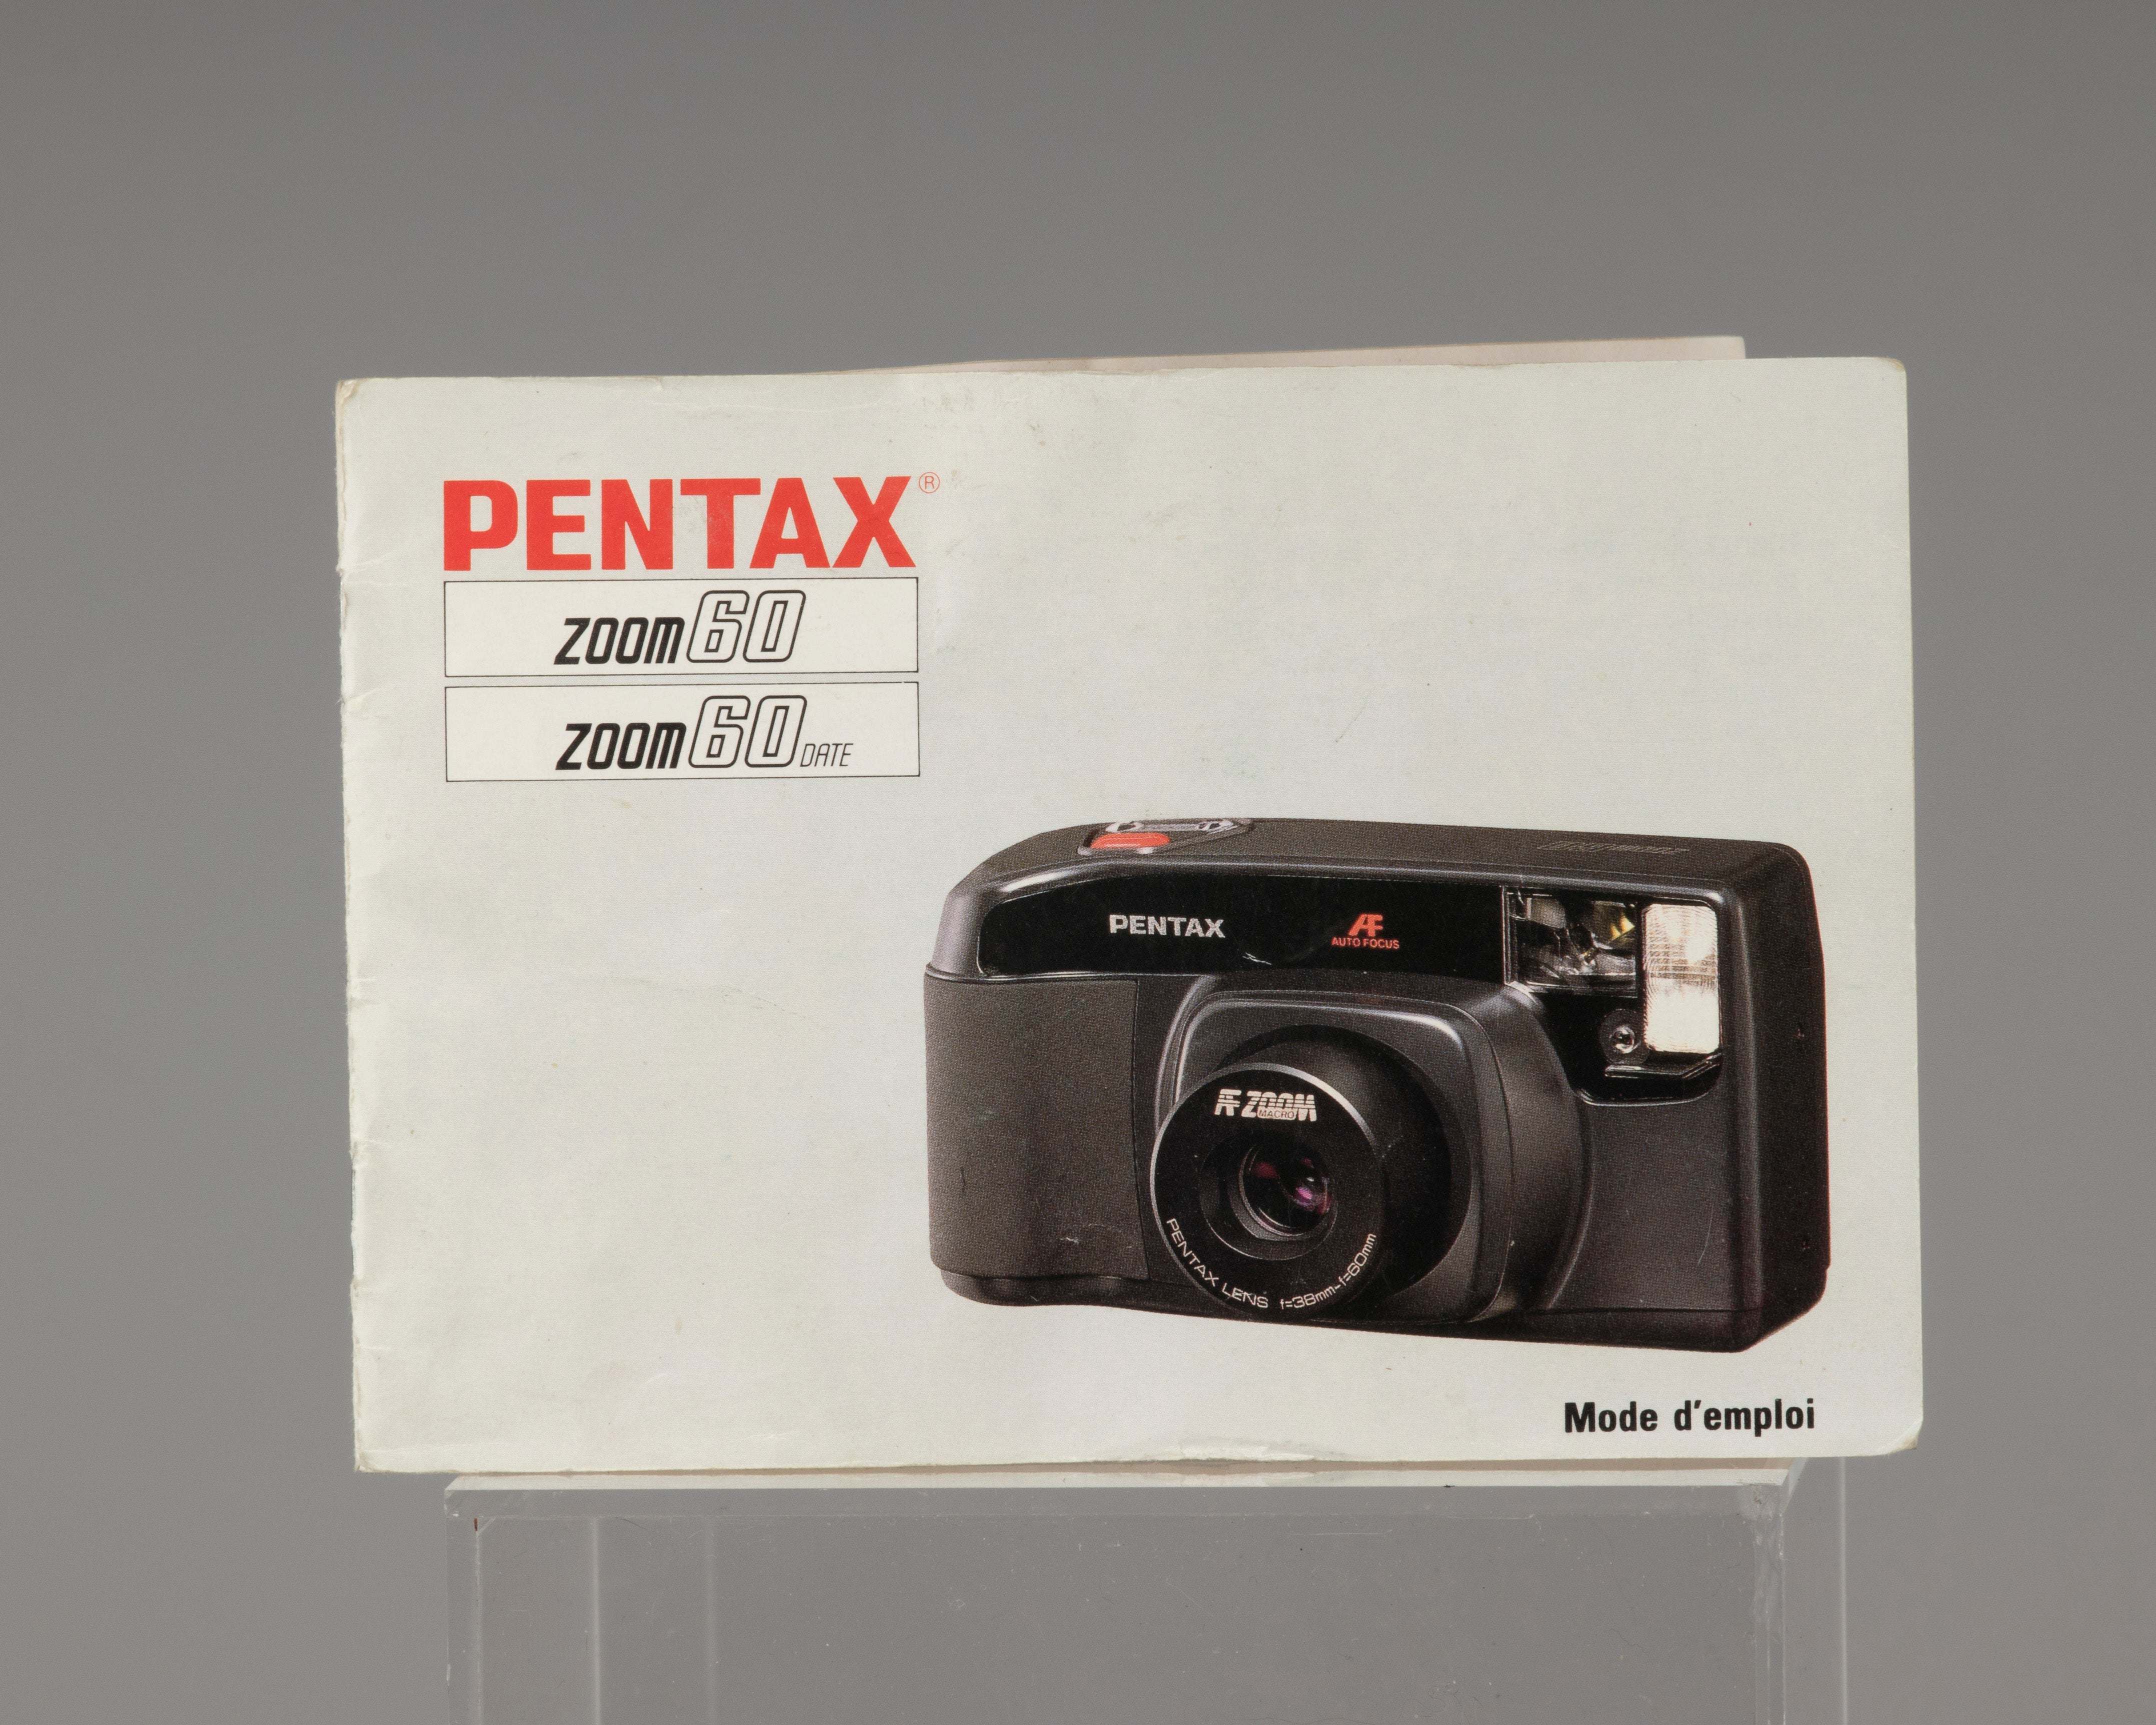 Pentax Zoom 60 35mm camera – New Wave Pool